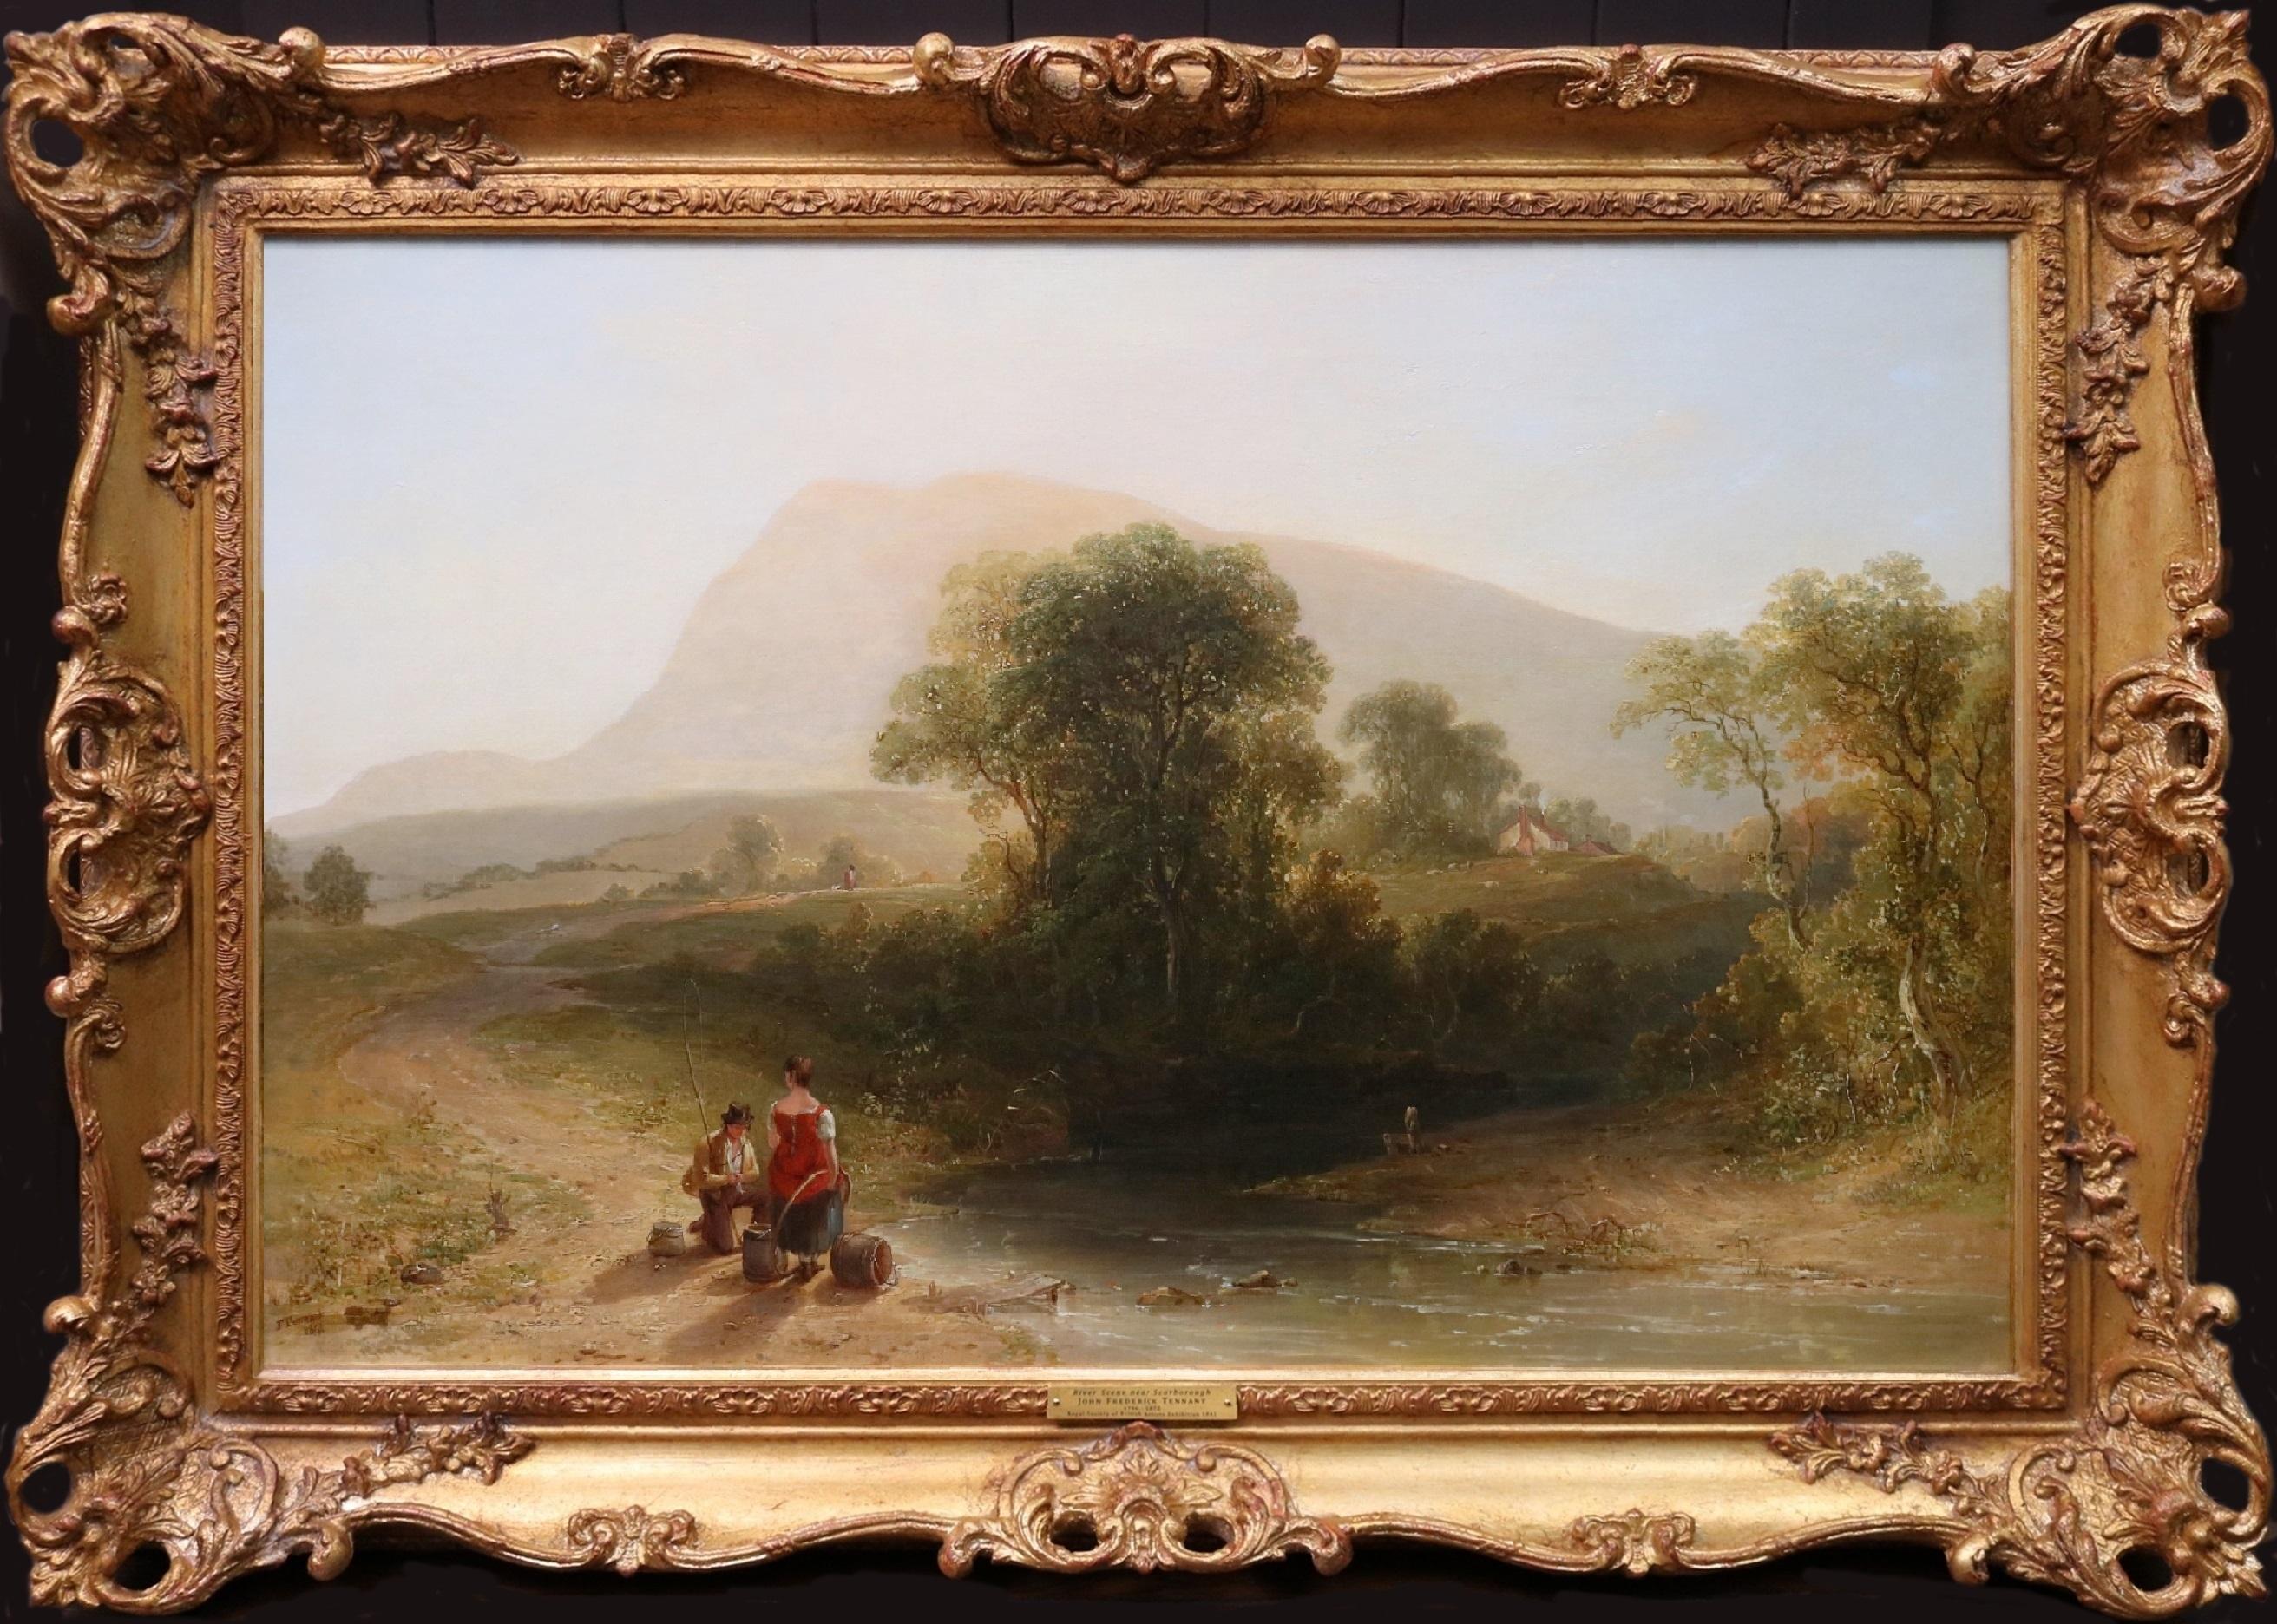  John Frederick Tennant RBA Landscape Painting - River Scene near Scarborough - 19th Century Exhibition Landscape Oil Painting 